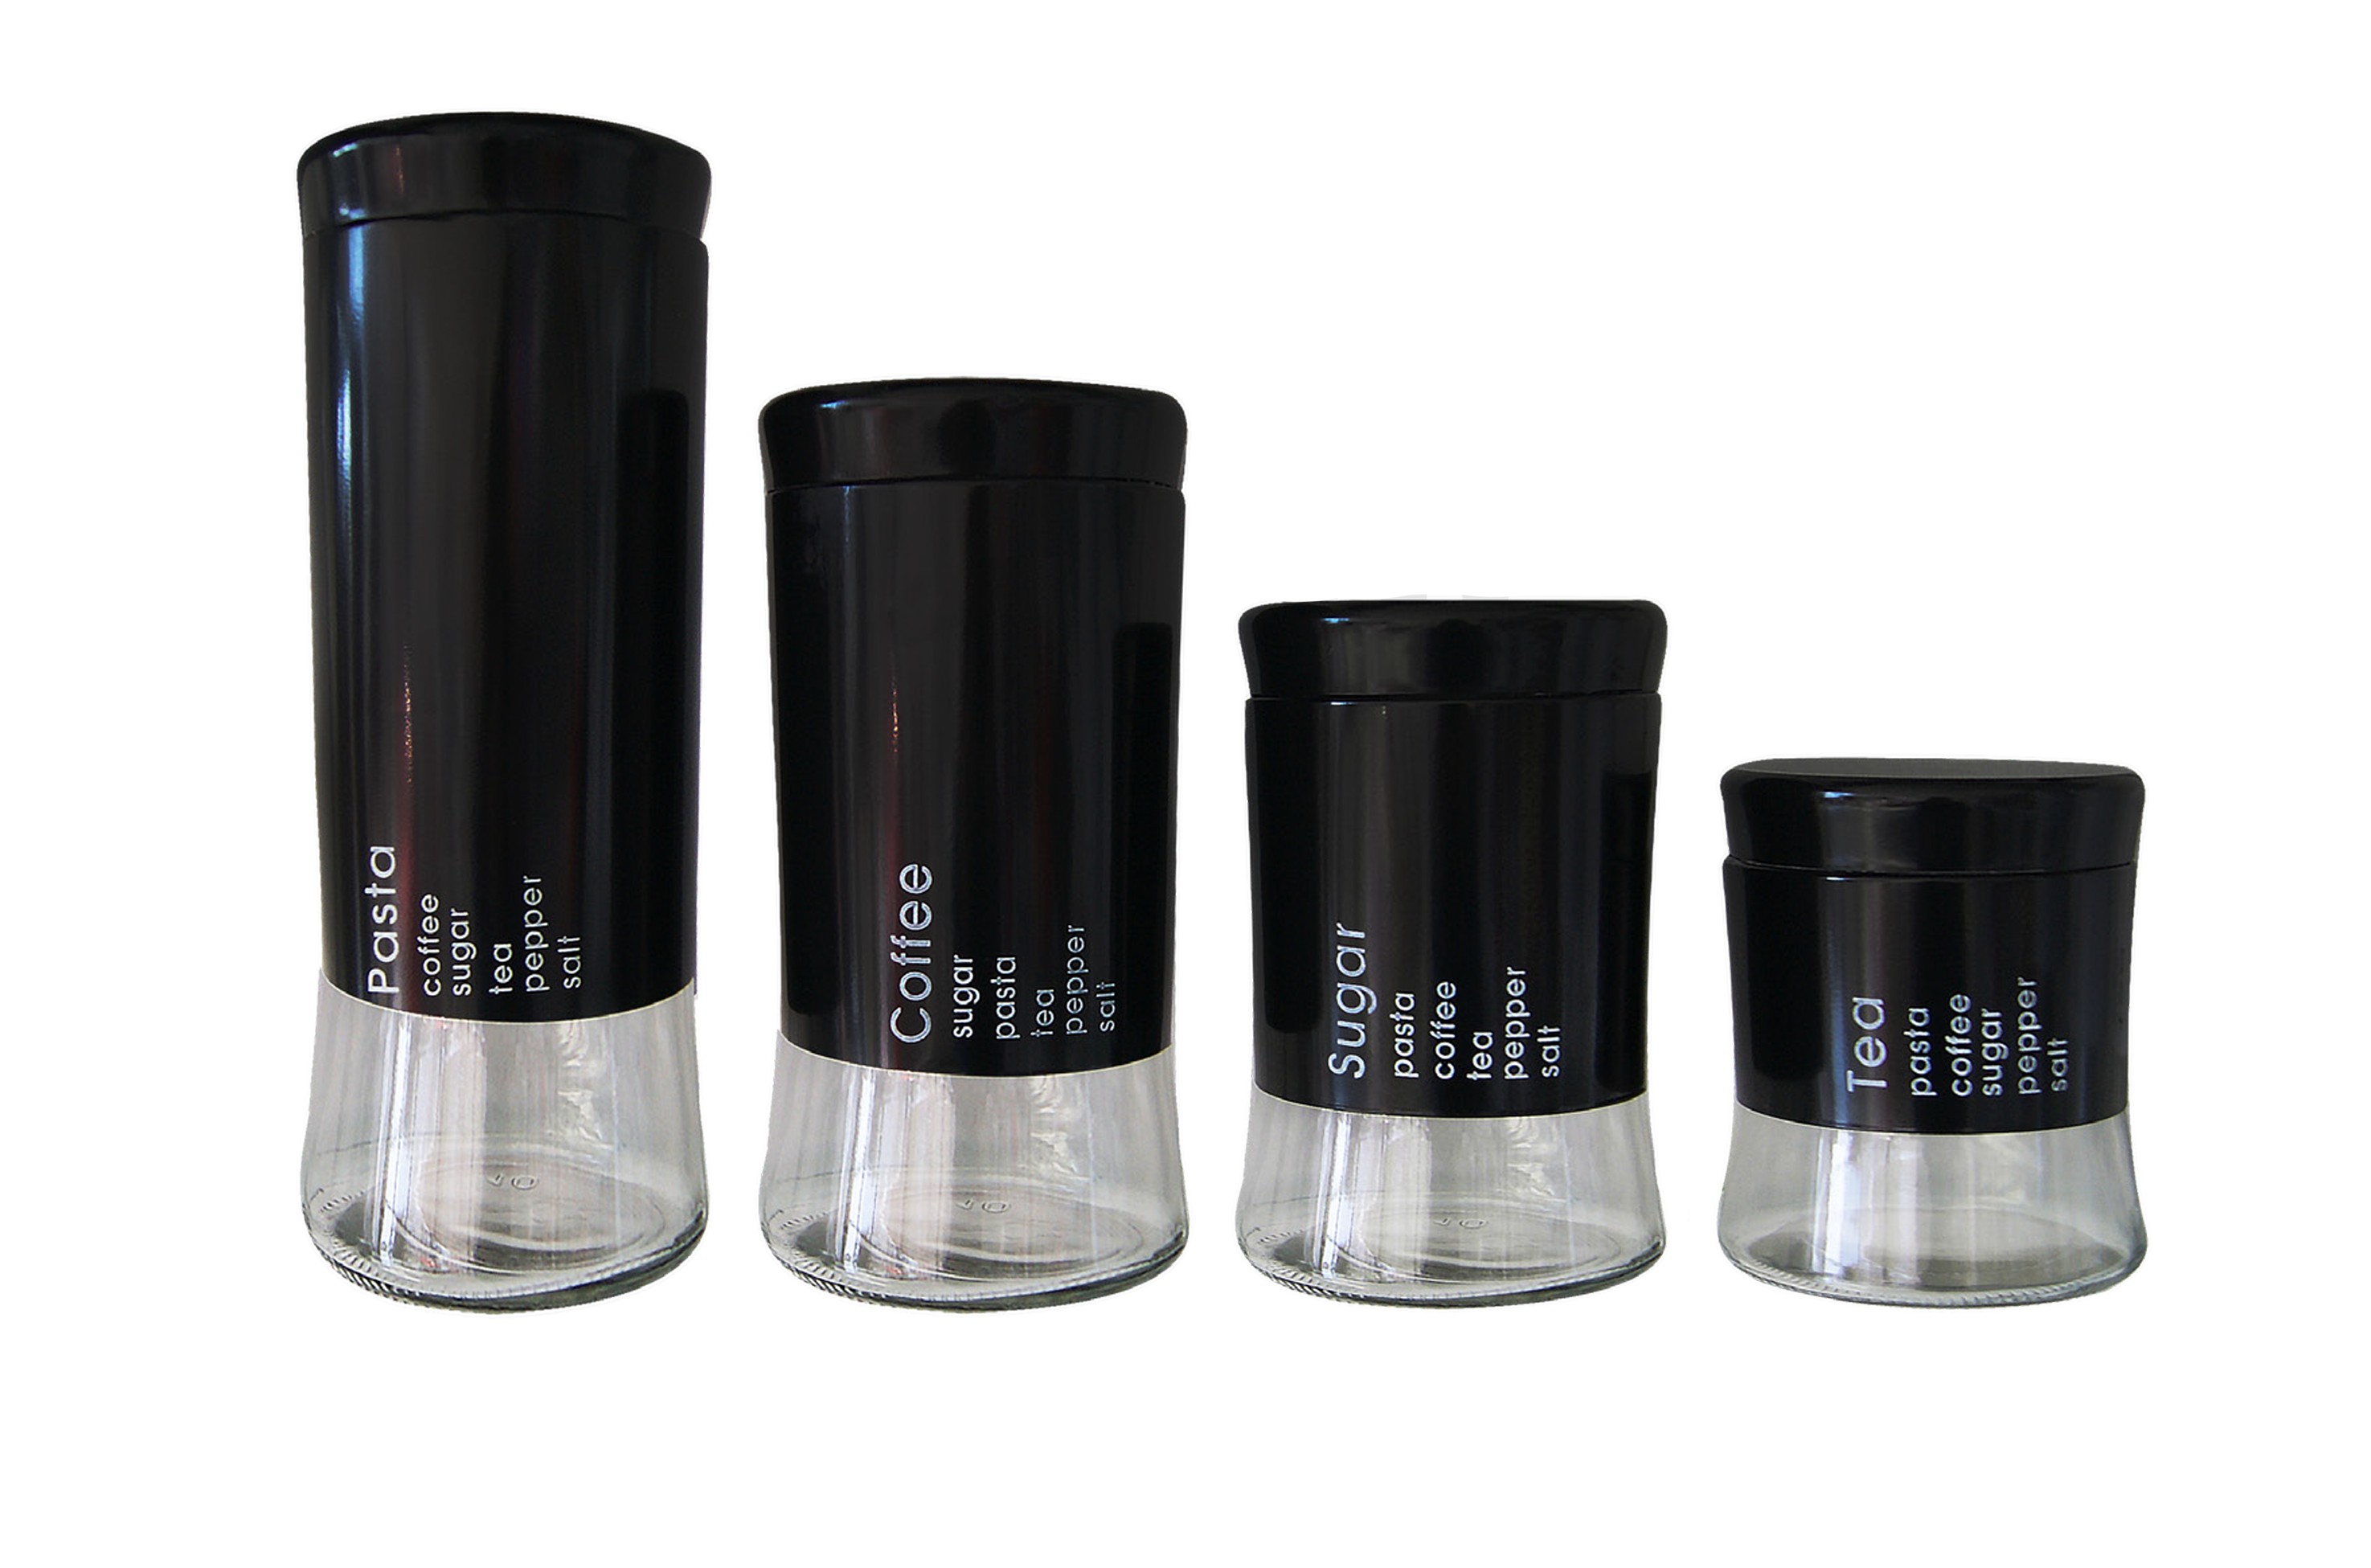 4 Piece Decadent Glass Jar Canisters - Coffee, Sugar, Tea and Pasta Storage